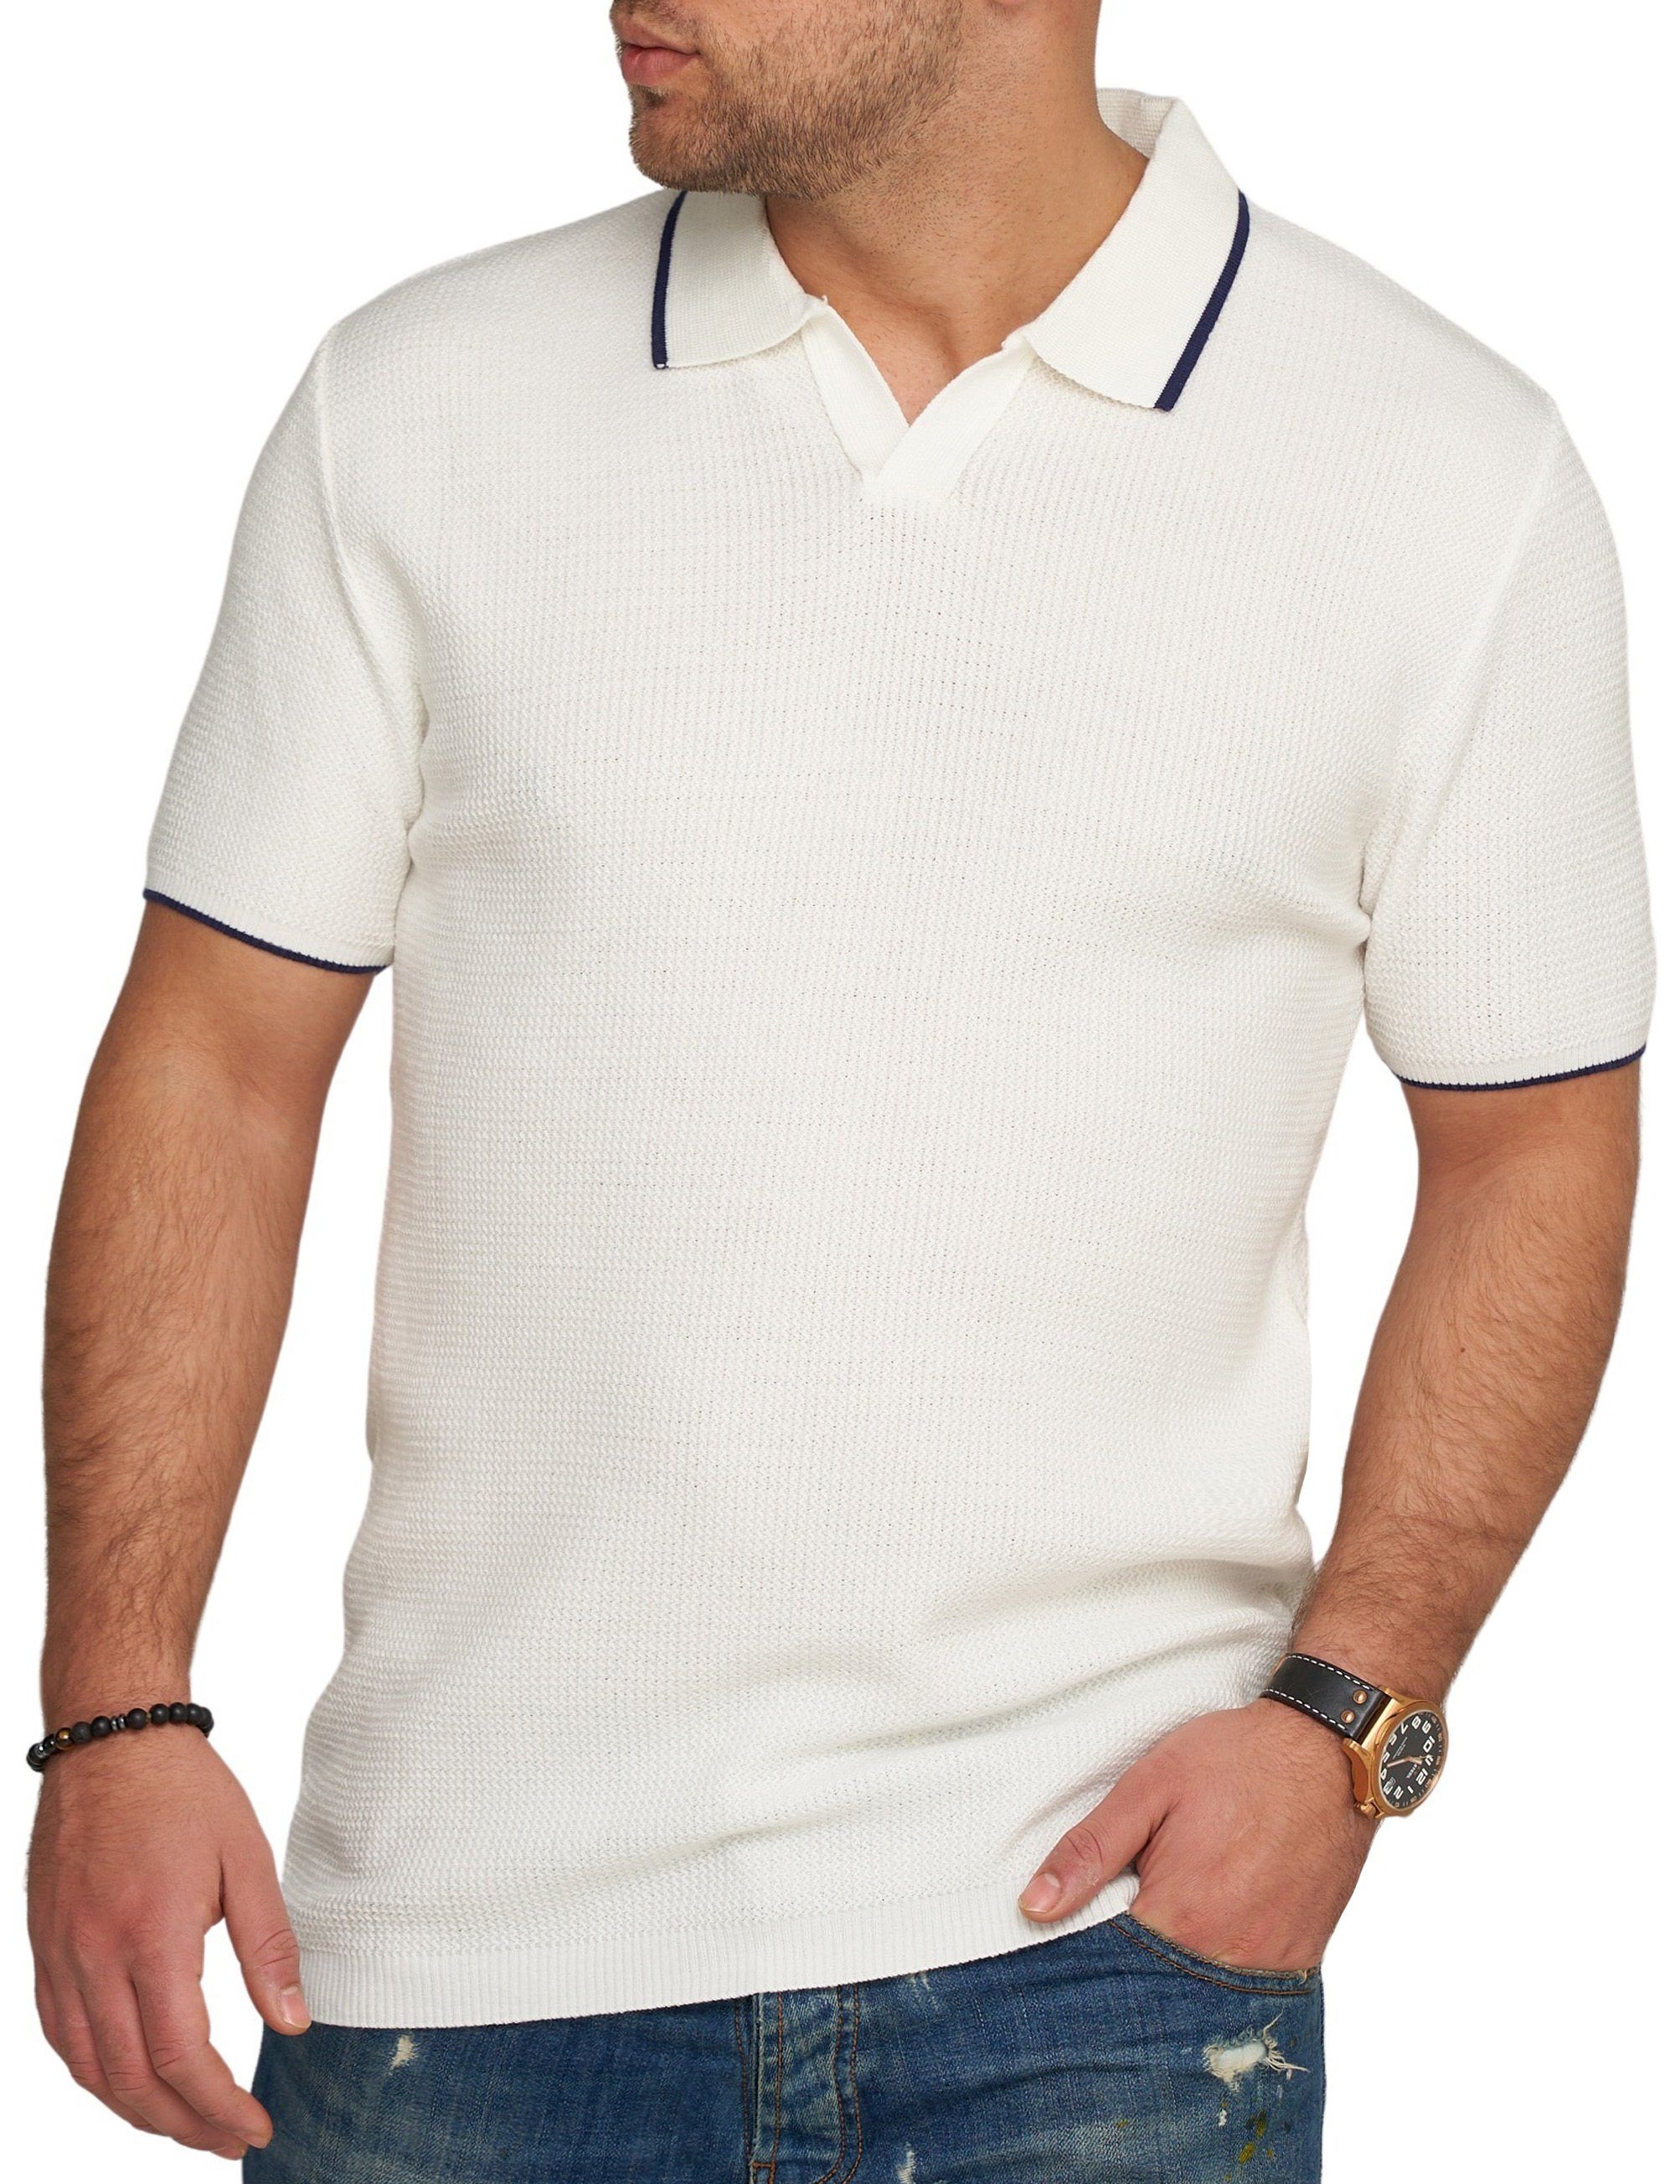 T-Shirt CRCANOAS Weiß Polo Poloshirt CARISMA Kurzarm Strick